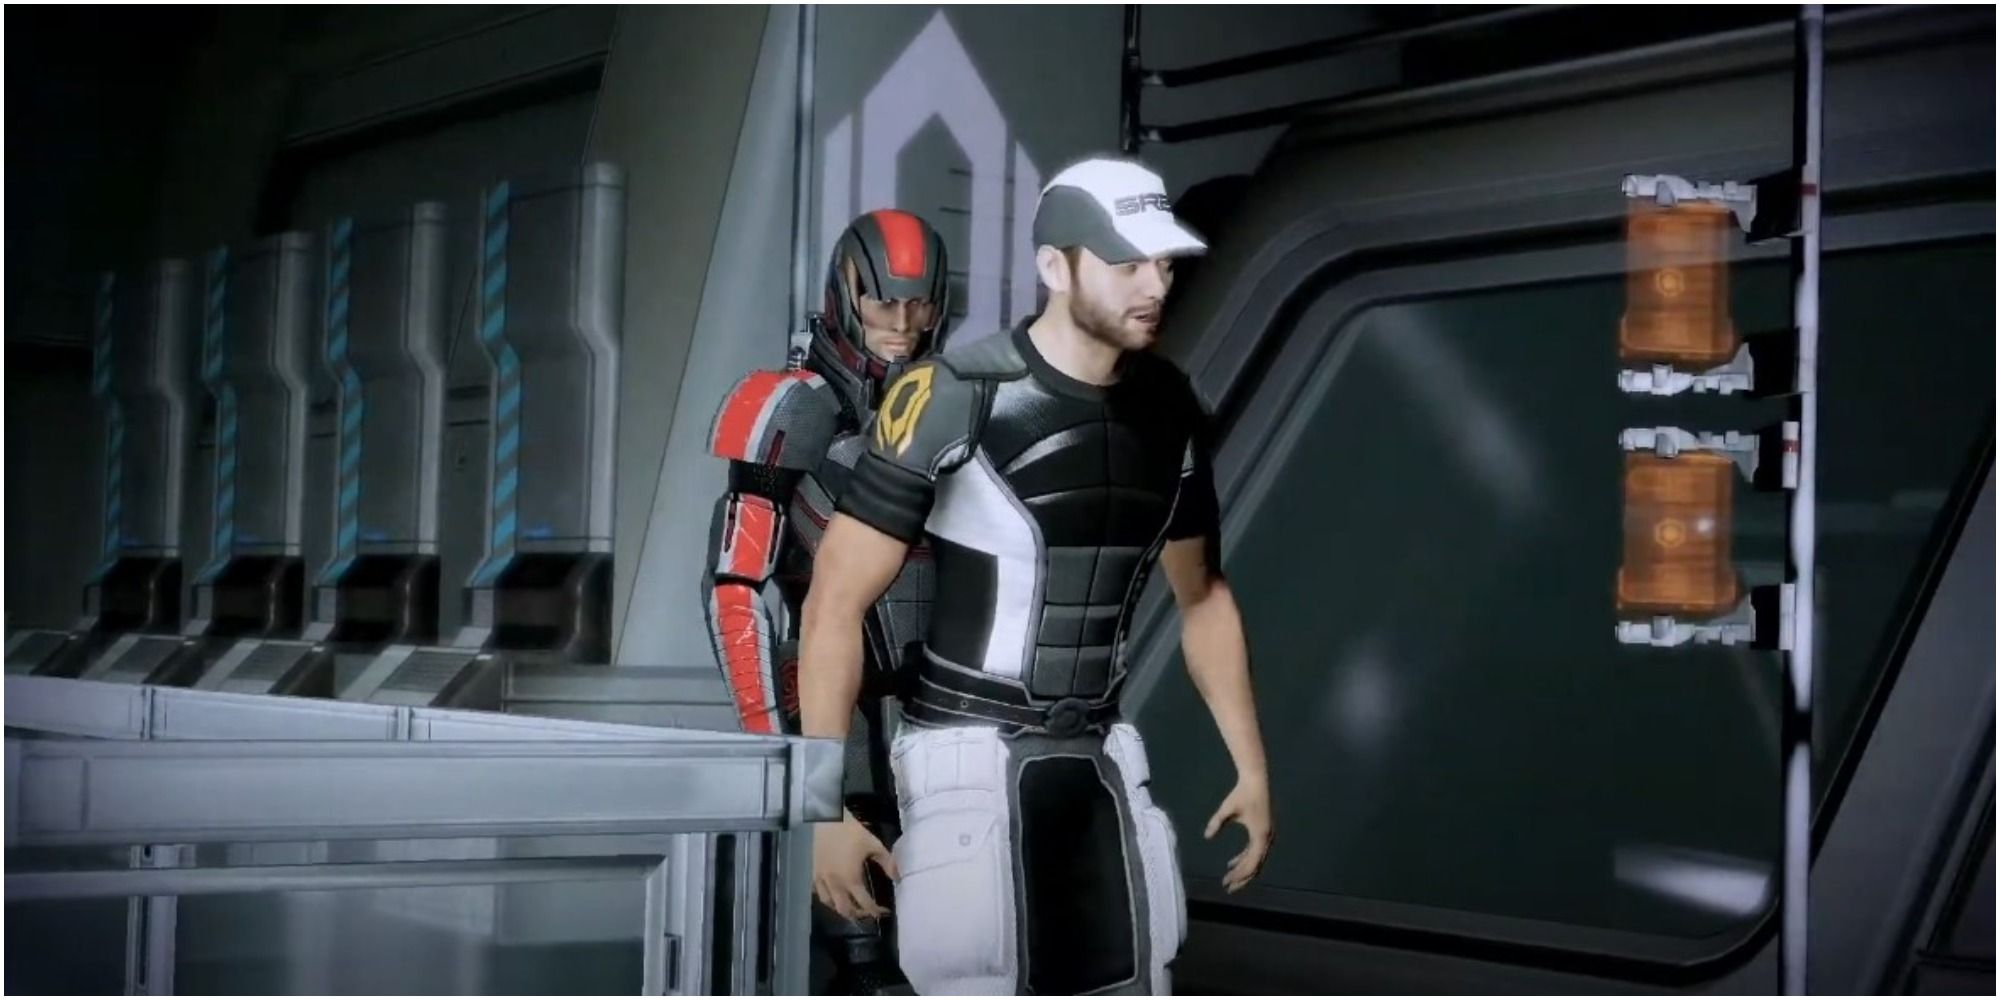 Mass Effect 2 Reuniting With Joker After Meeting The Illusive Man